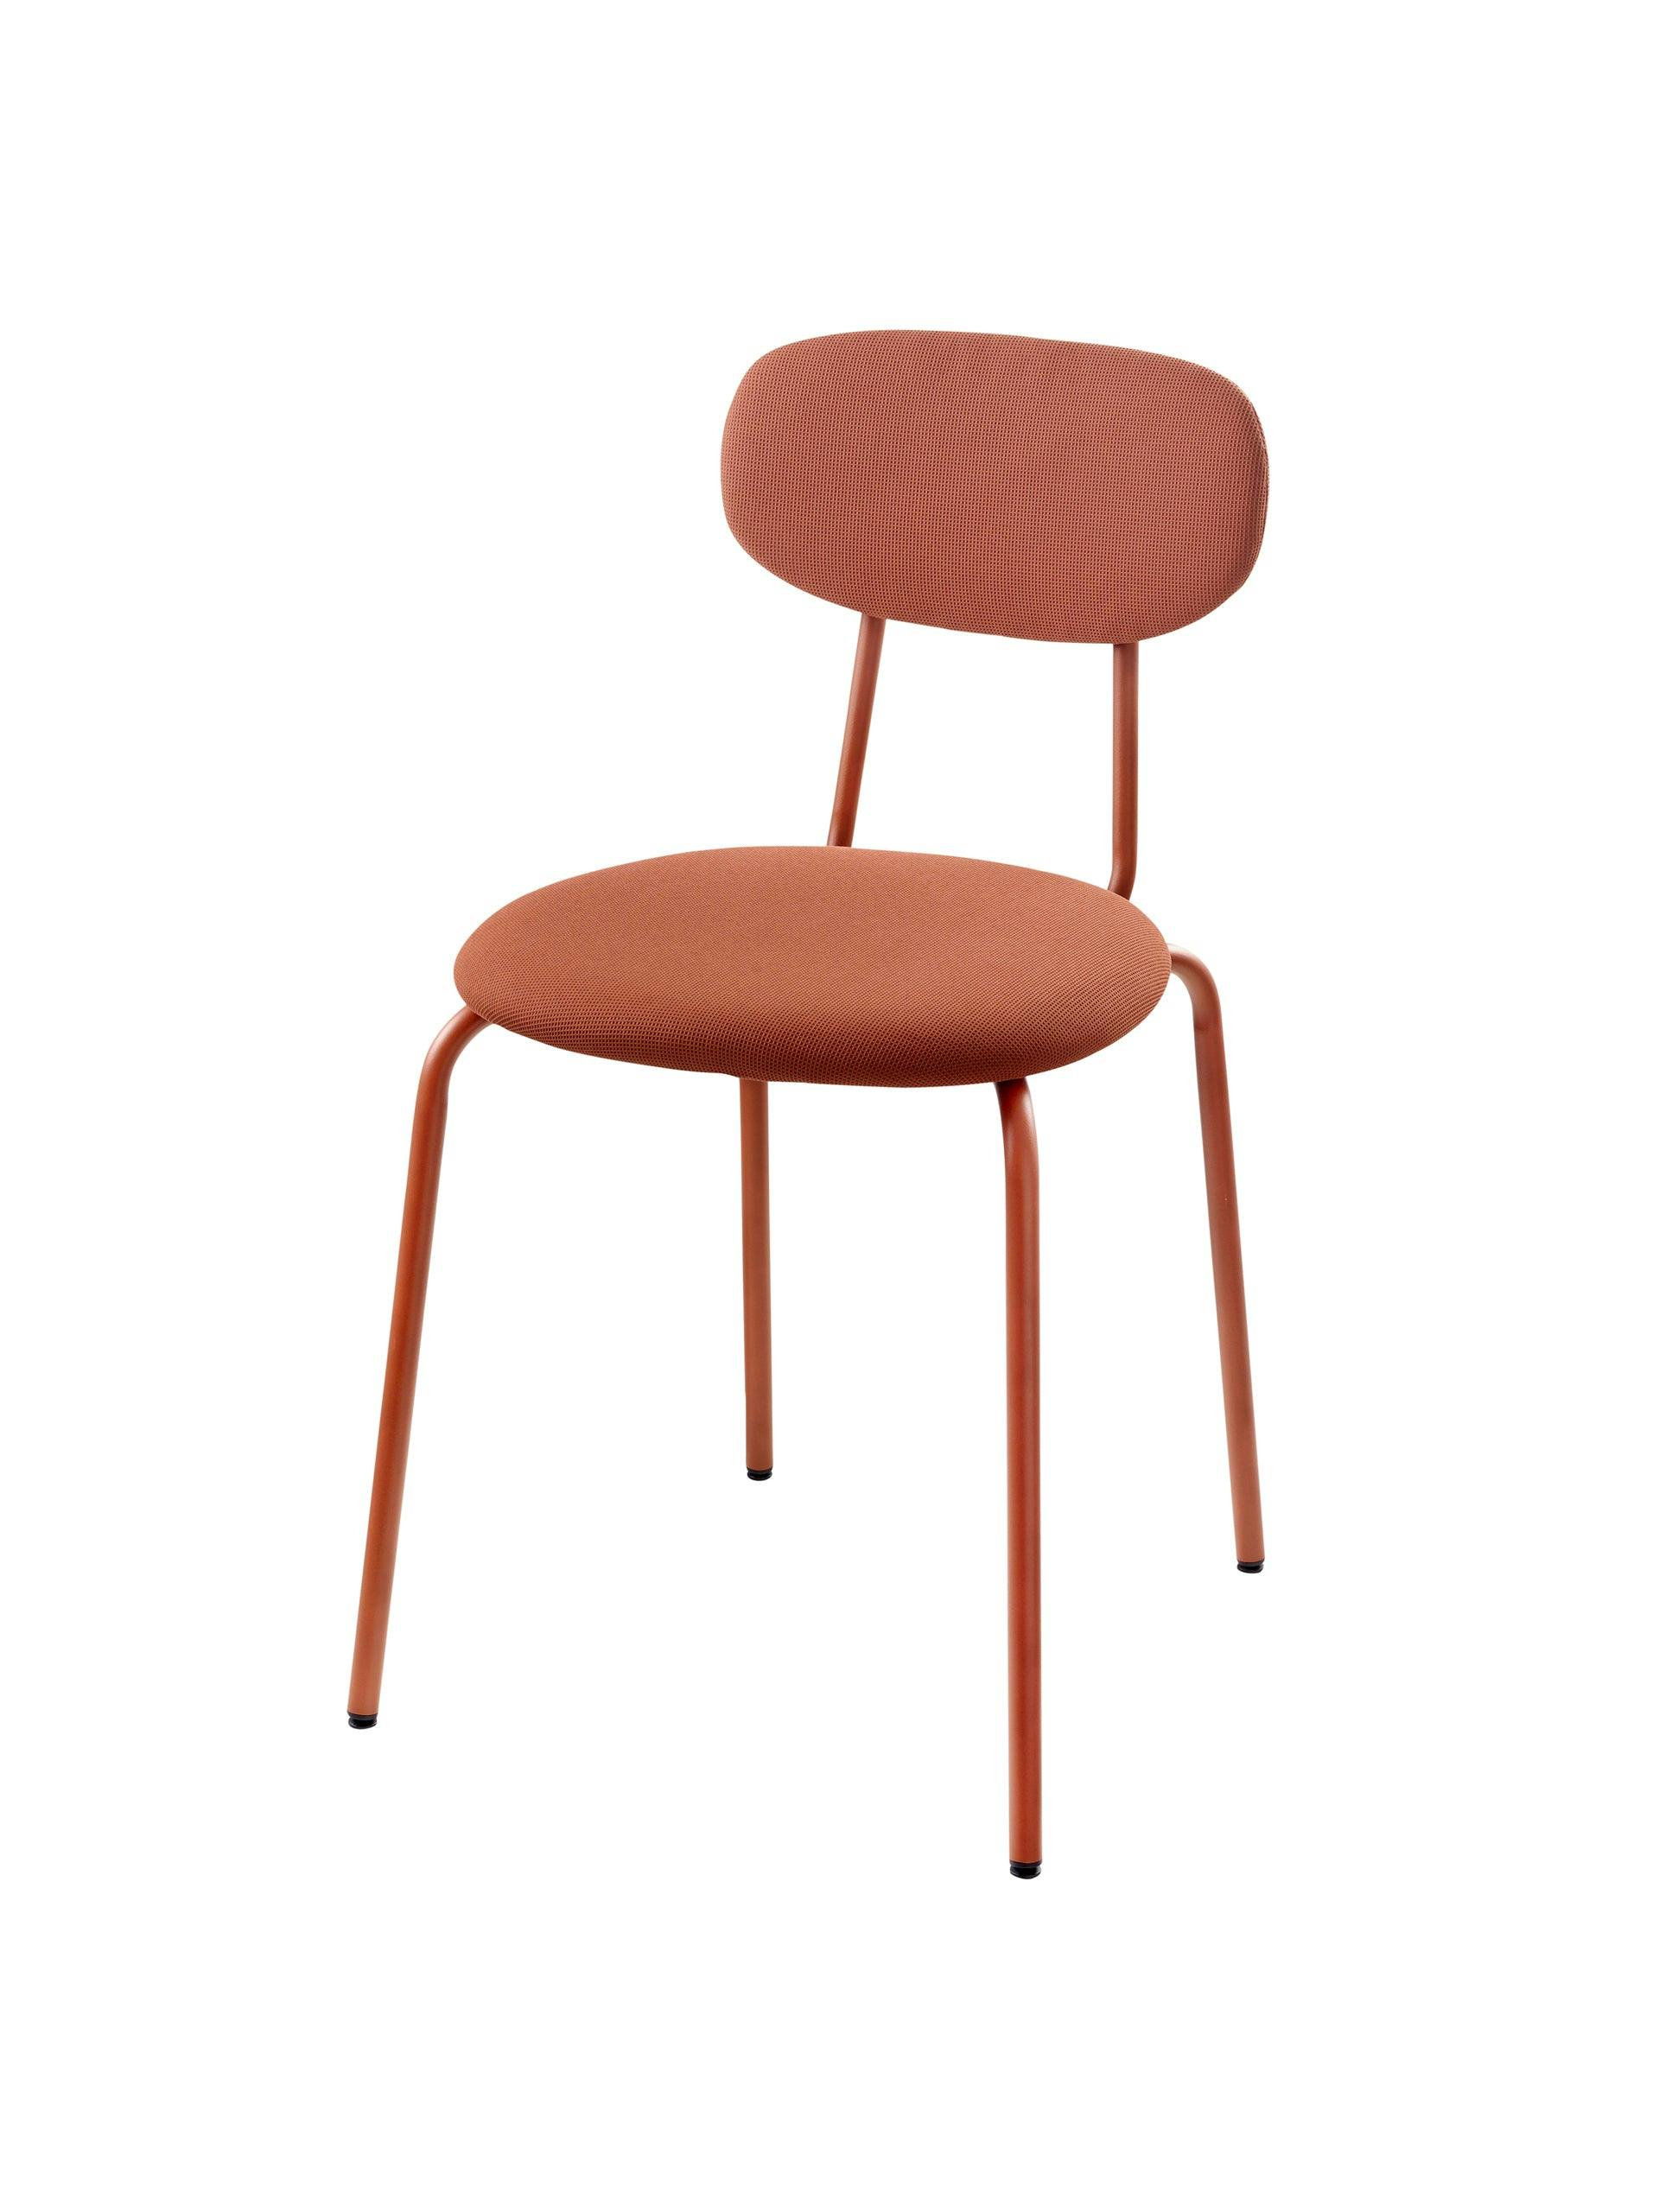 Metal framed chair in red/brown